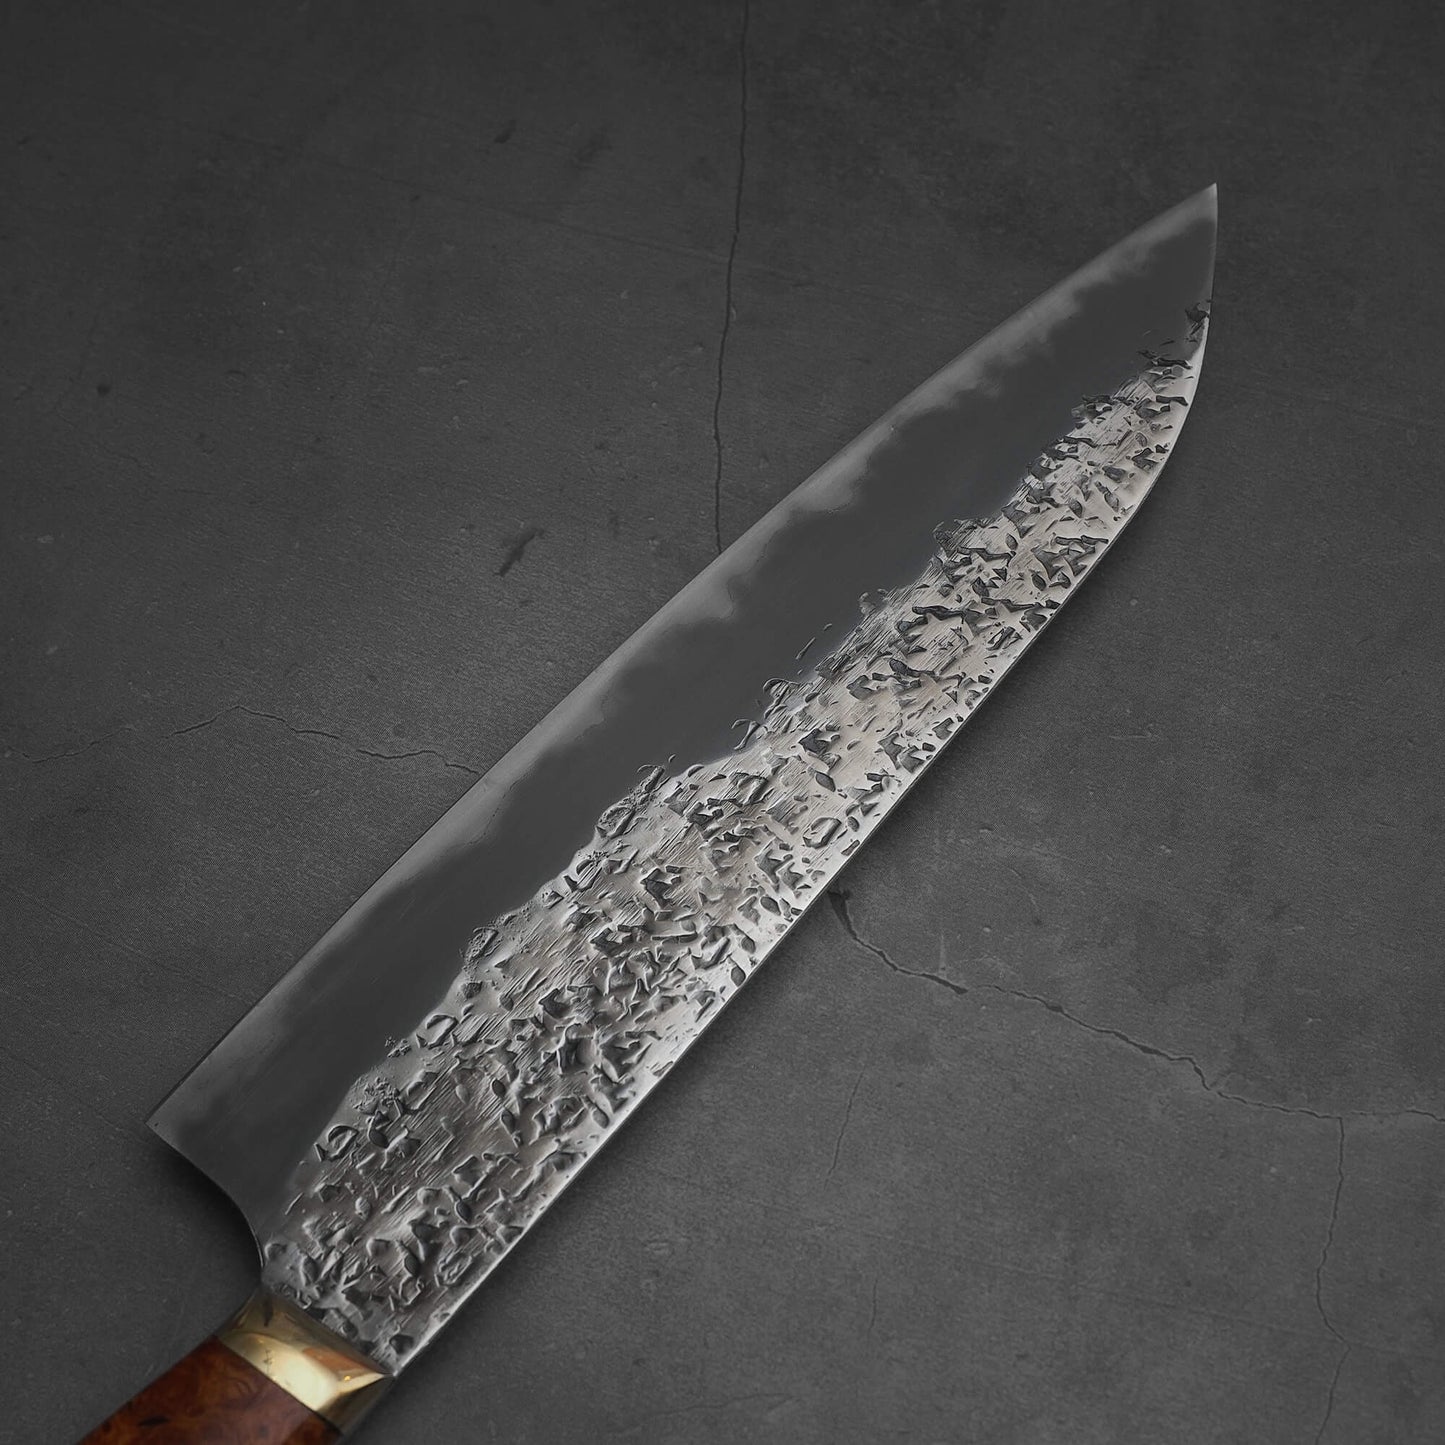 Top view of the left side of 220mm Kisuke Manaka tsuchime honwarikomi shirogami#2 gyuto knife